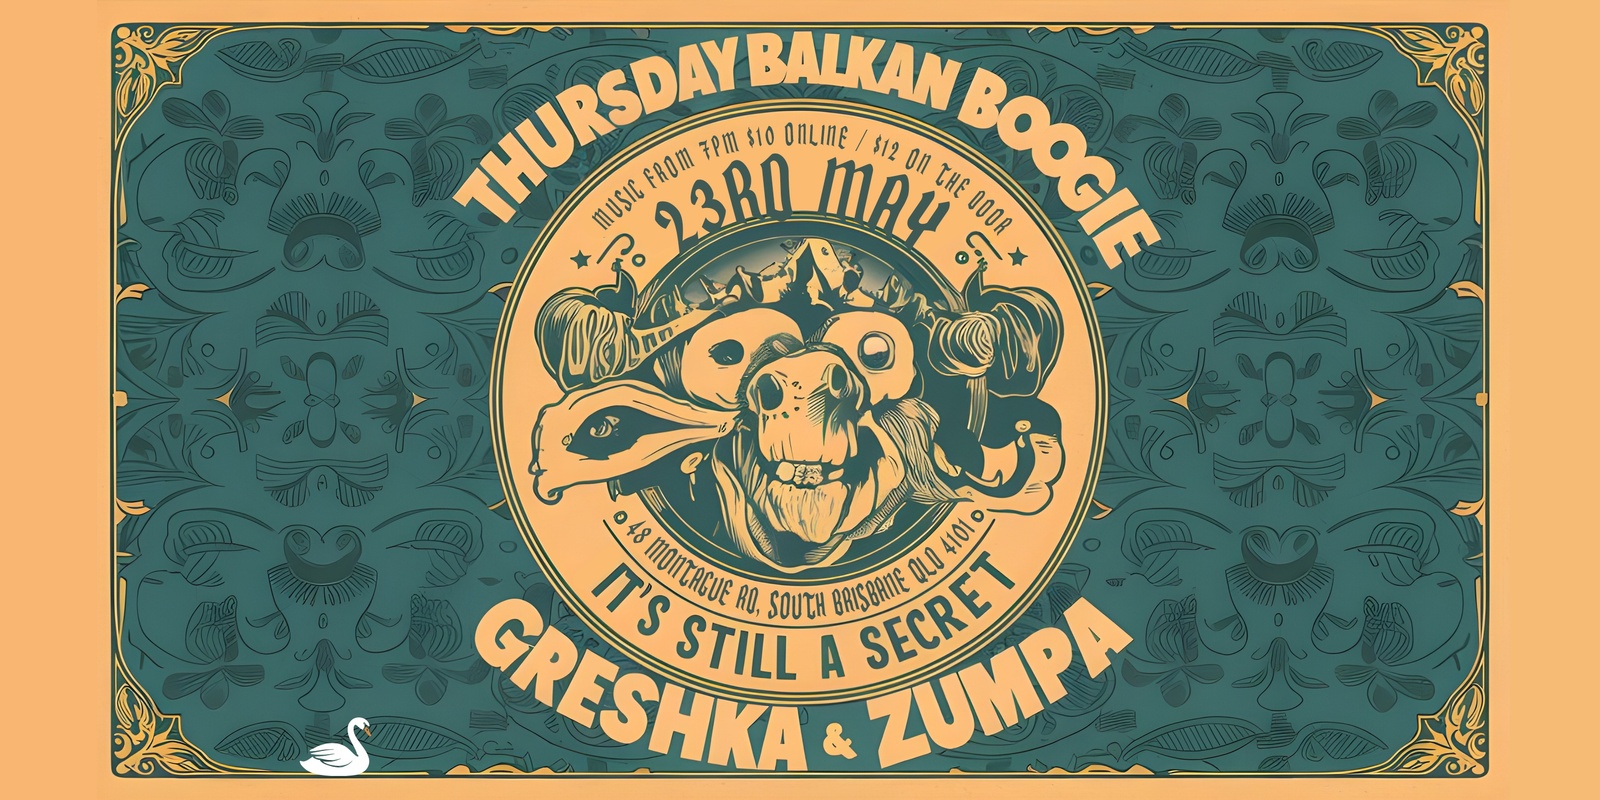 Banner image for Thursday Balkan Boogie with Zumpa and Greshka